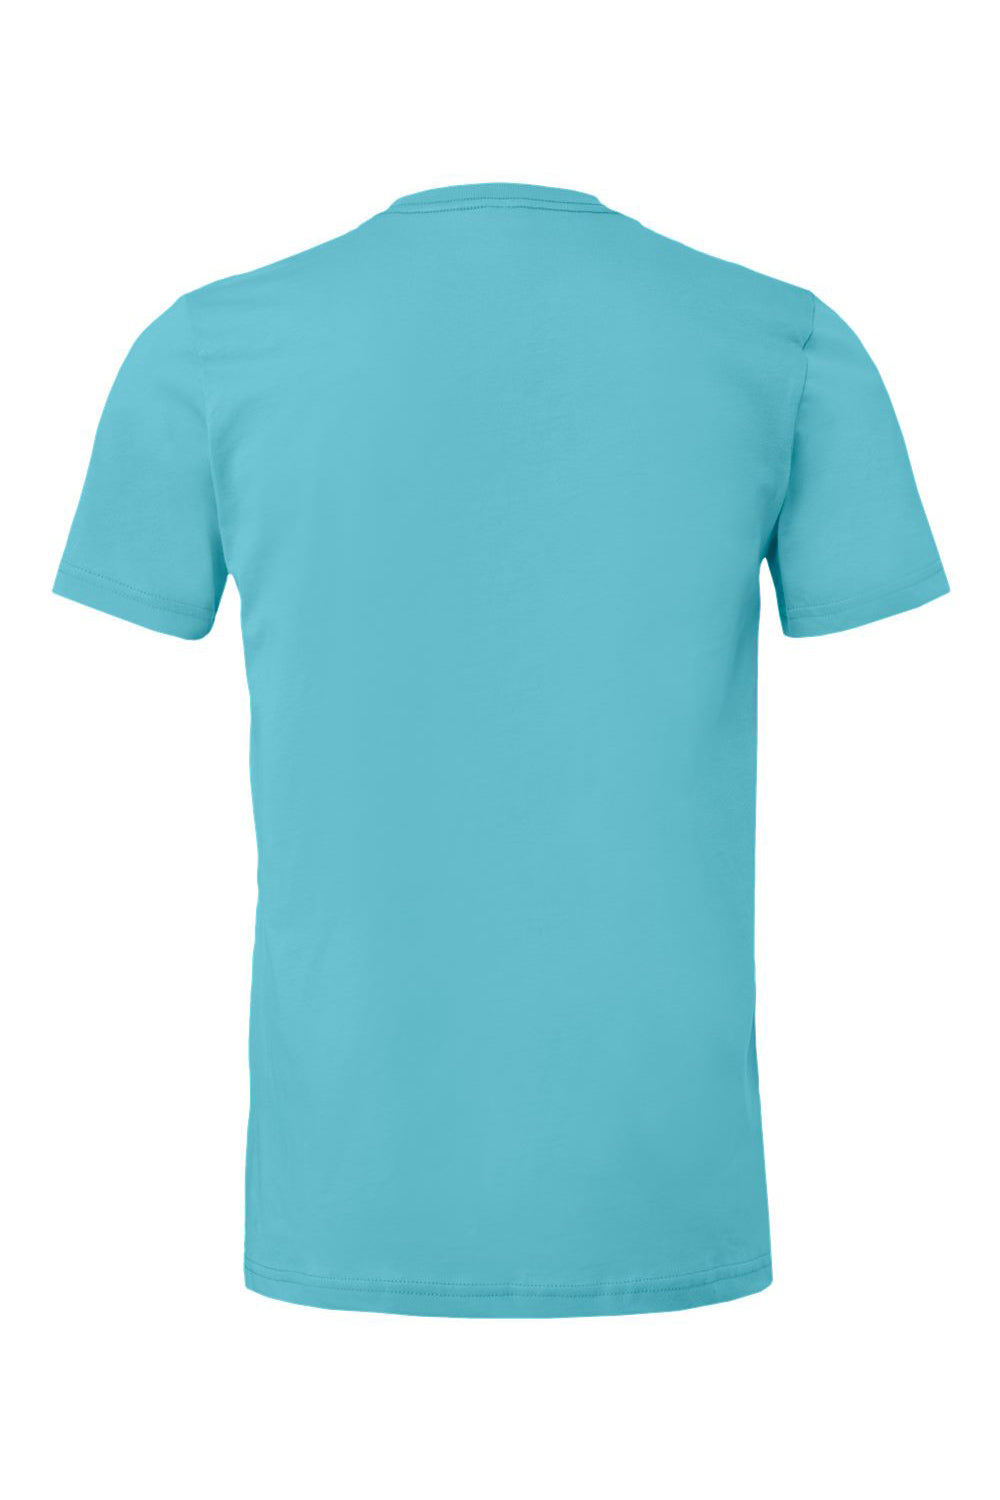 Bella + Canvas BC3001/3001C Mens Jersey Short Sleeve Crewneck T-Shirt Turquoise Blue Flat Back